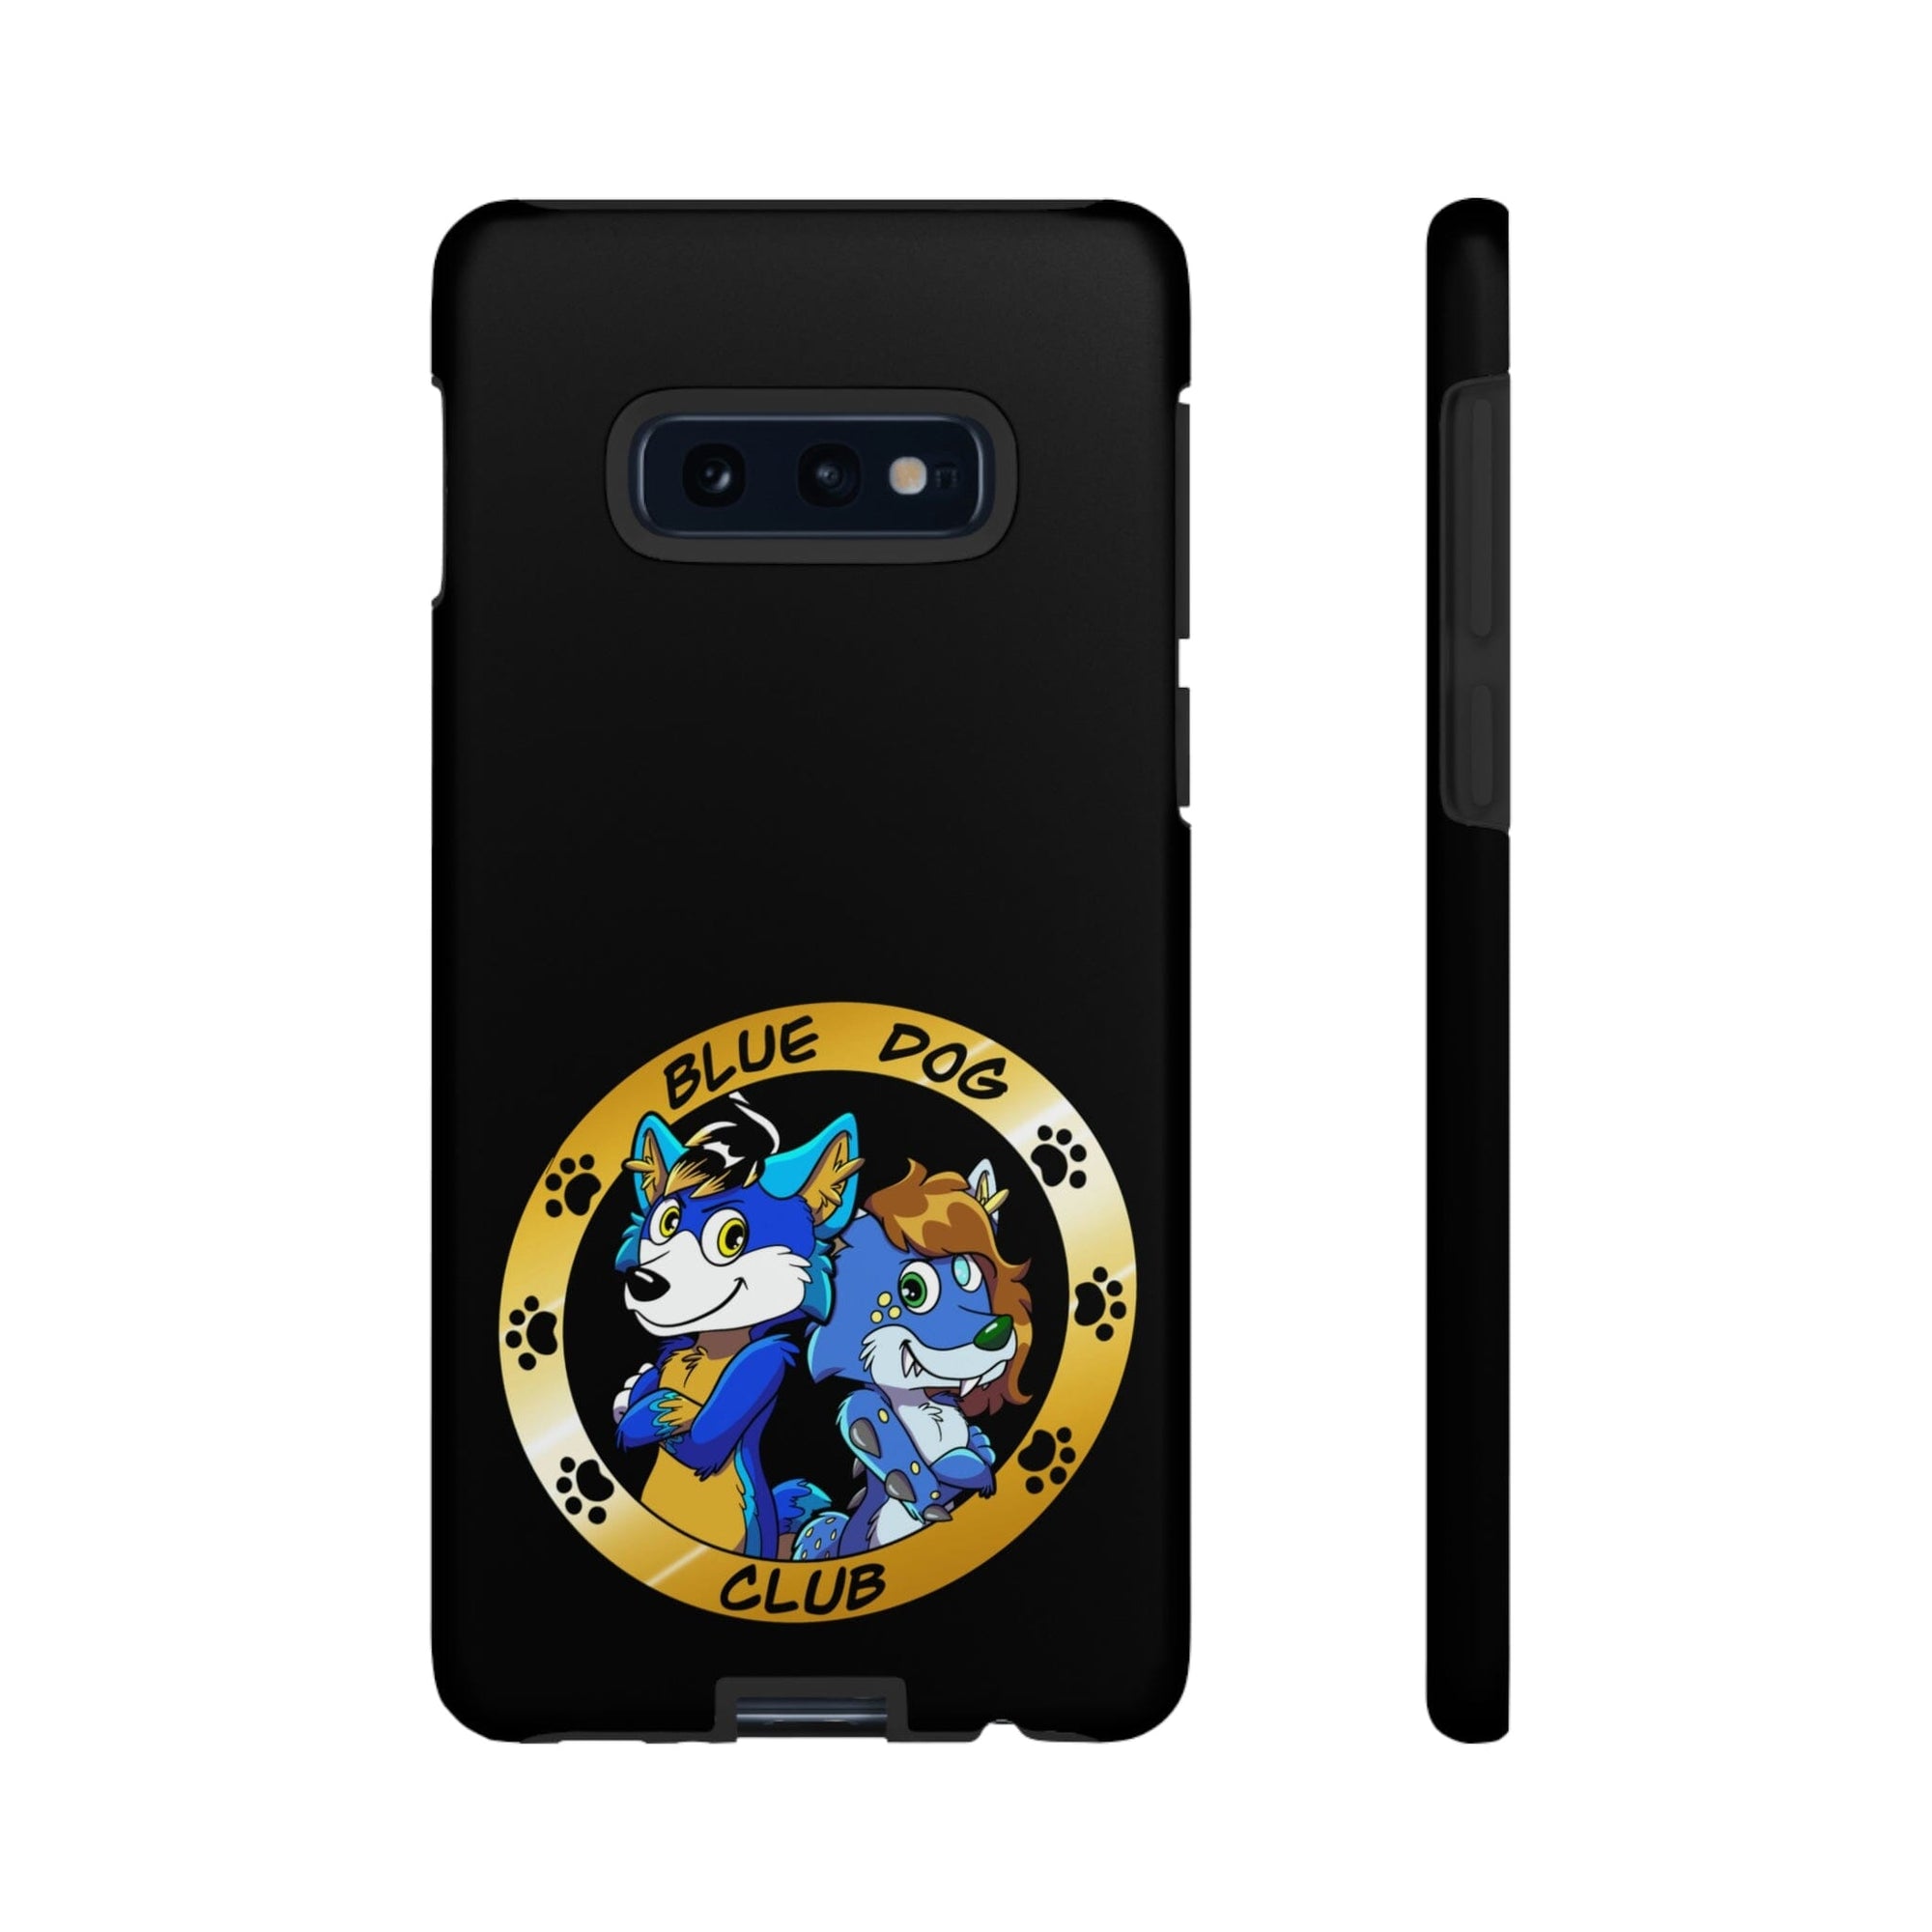 Hund The Hound - Blue Dog Club - Phone Case Phone Case Printify Samsung Galaxy S10E Matte 